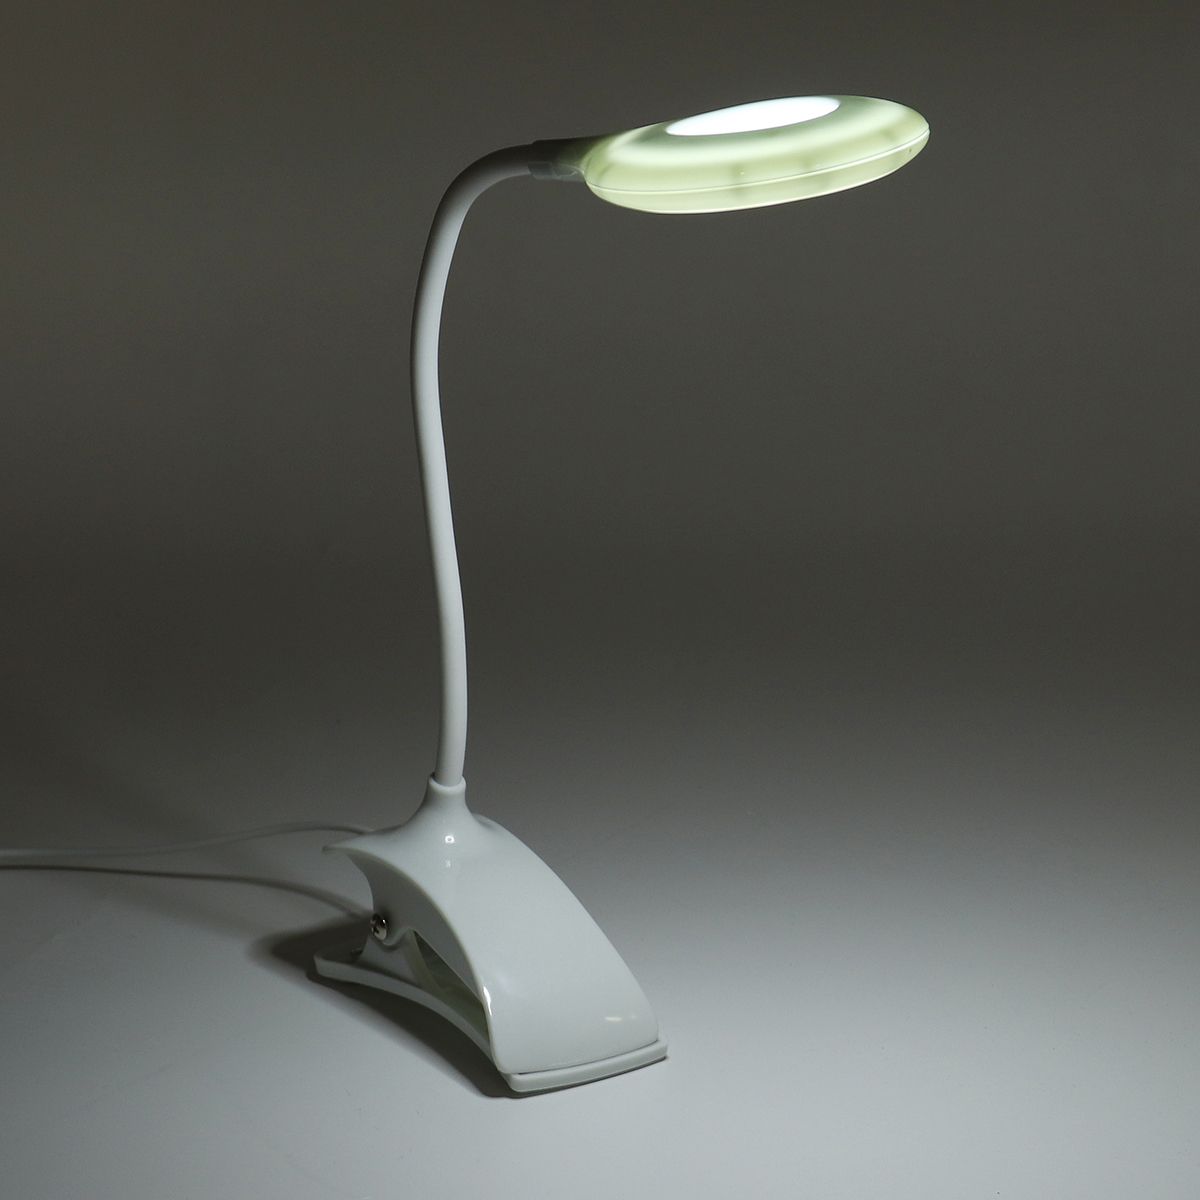 17W-LED-Desk-Lamp-Flexible-Table-Light-USB-Charging-No-Flicker-Reading-Studying-1640553